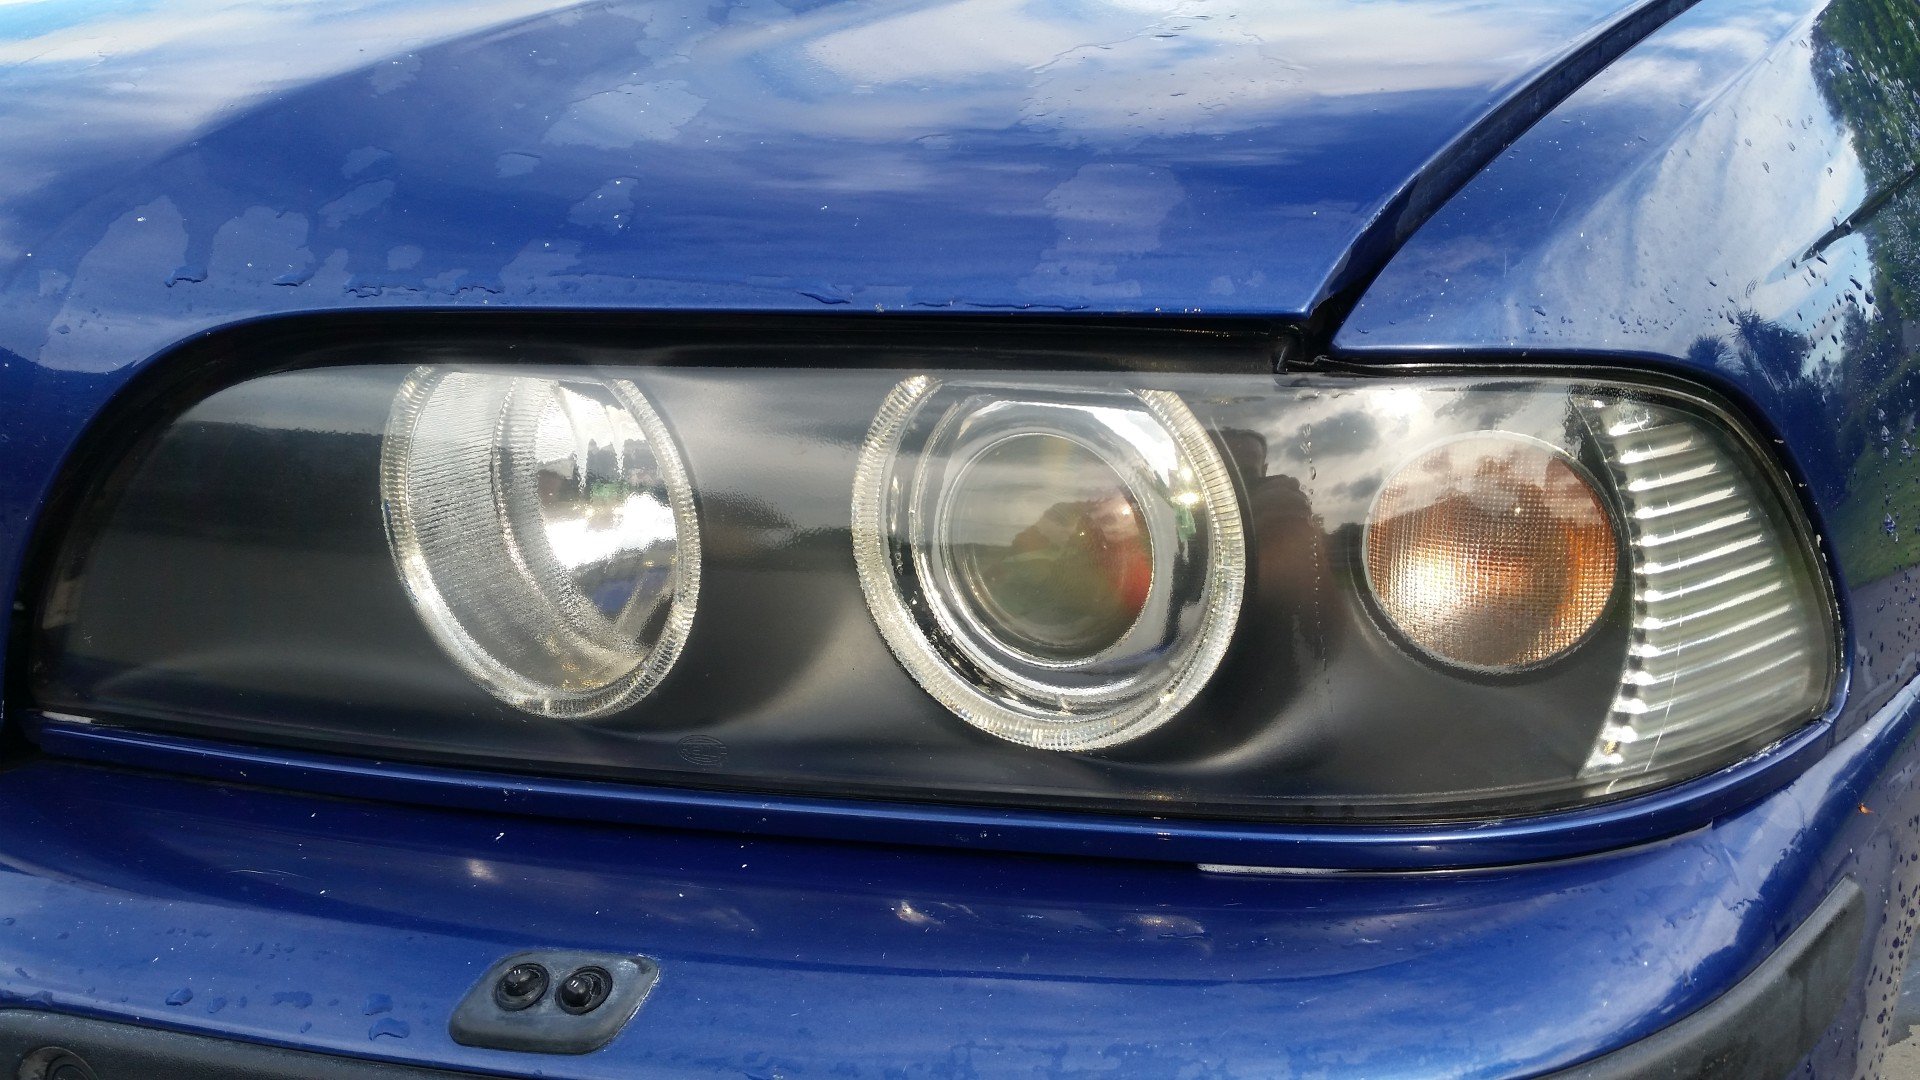 BMW E39 Facelift Headlights *** SOLD *** - For Sale - bimmersport.co.nz